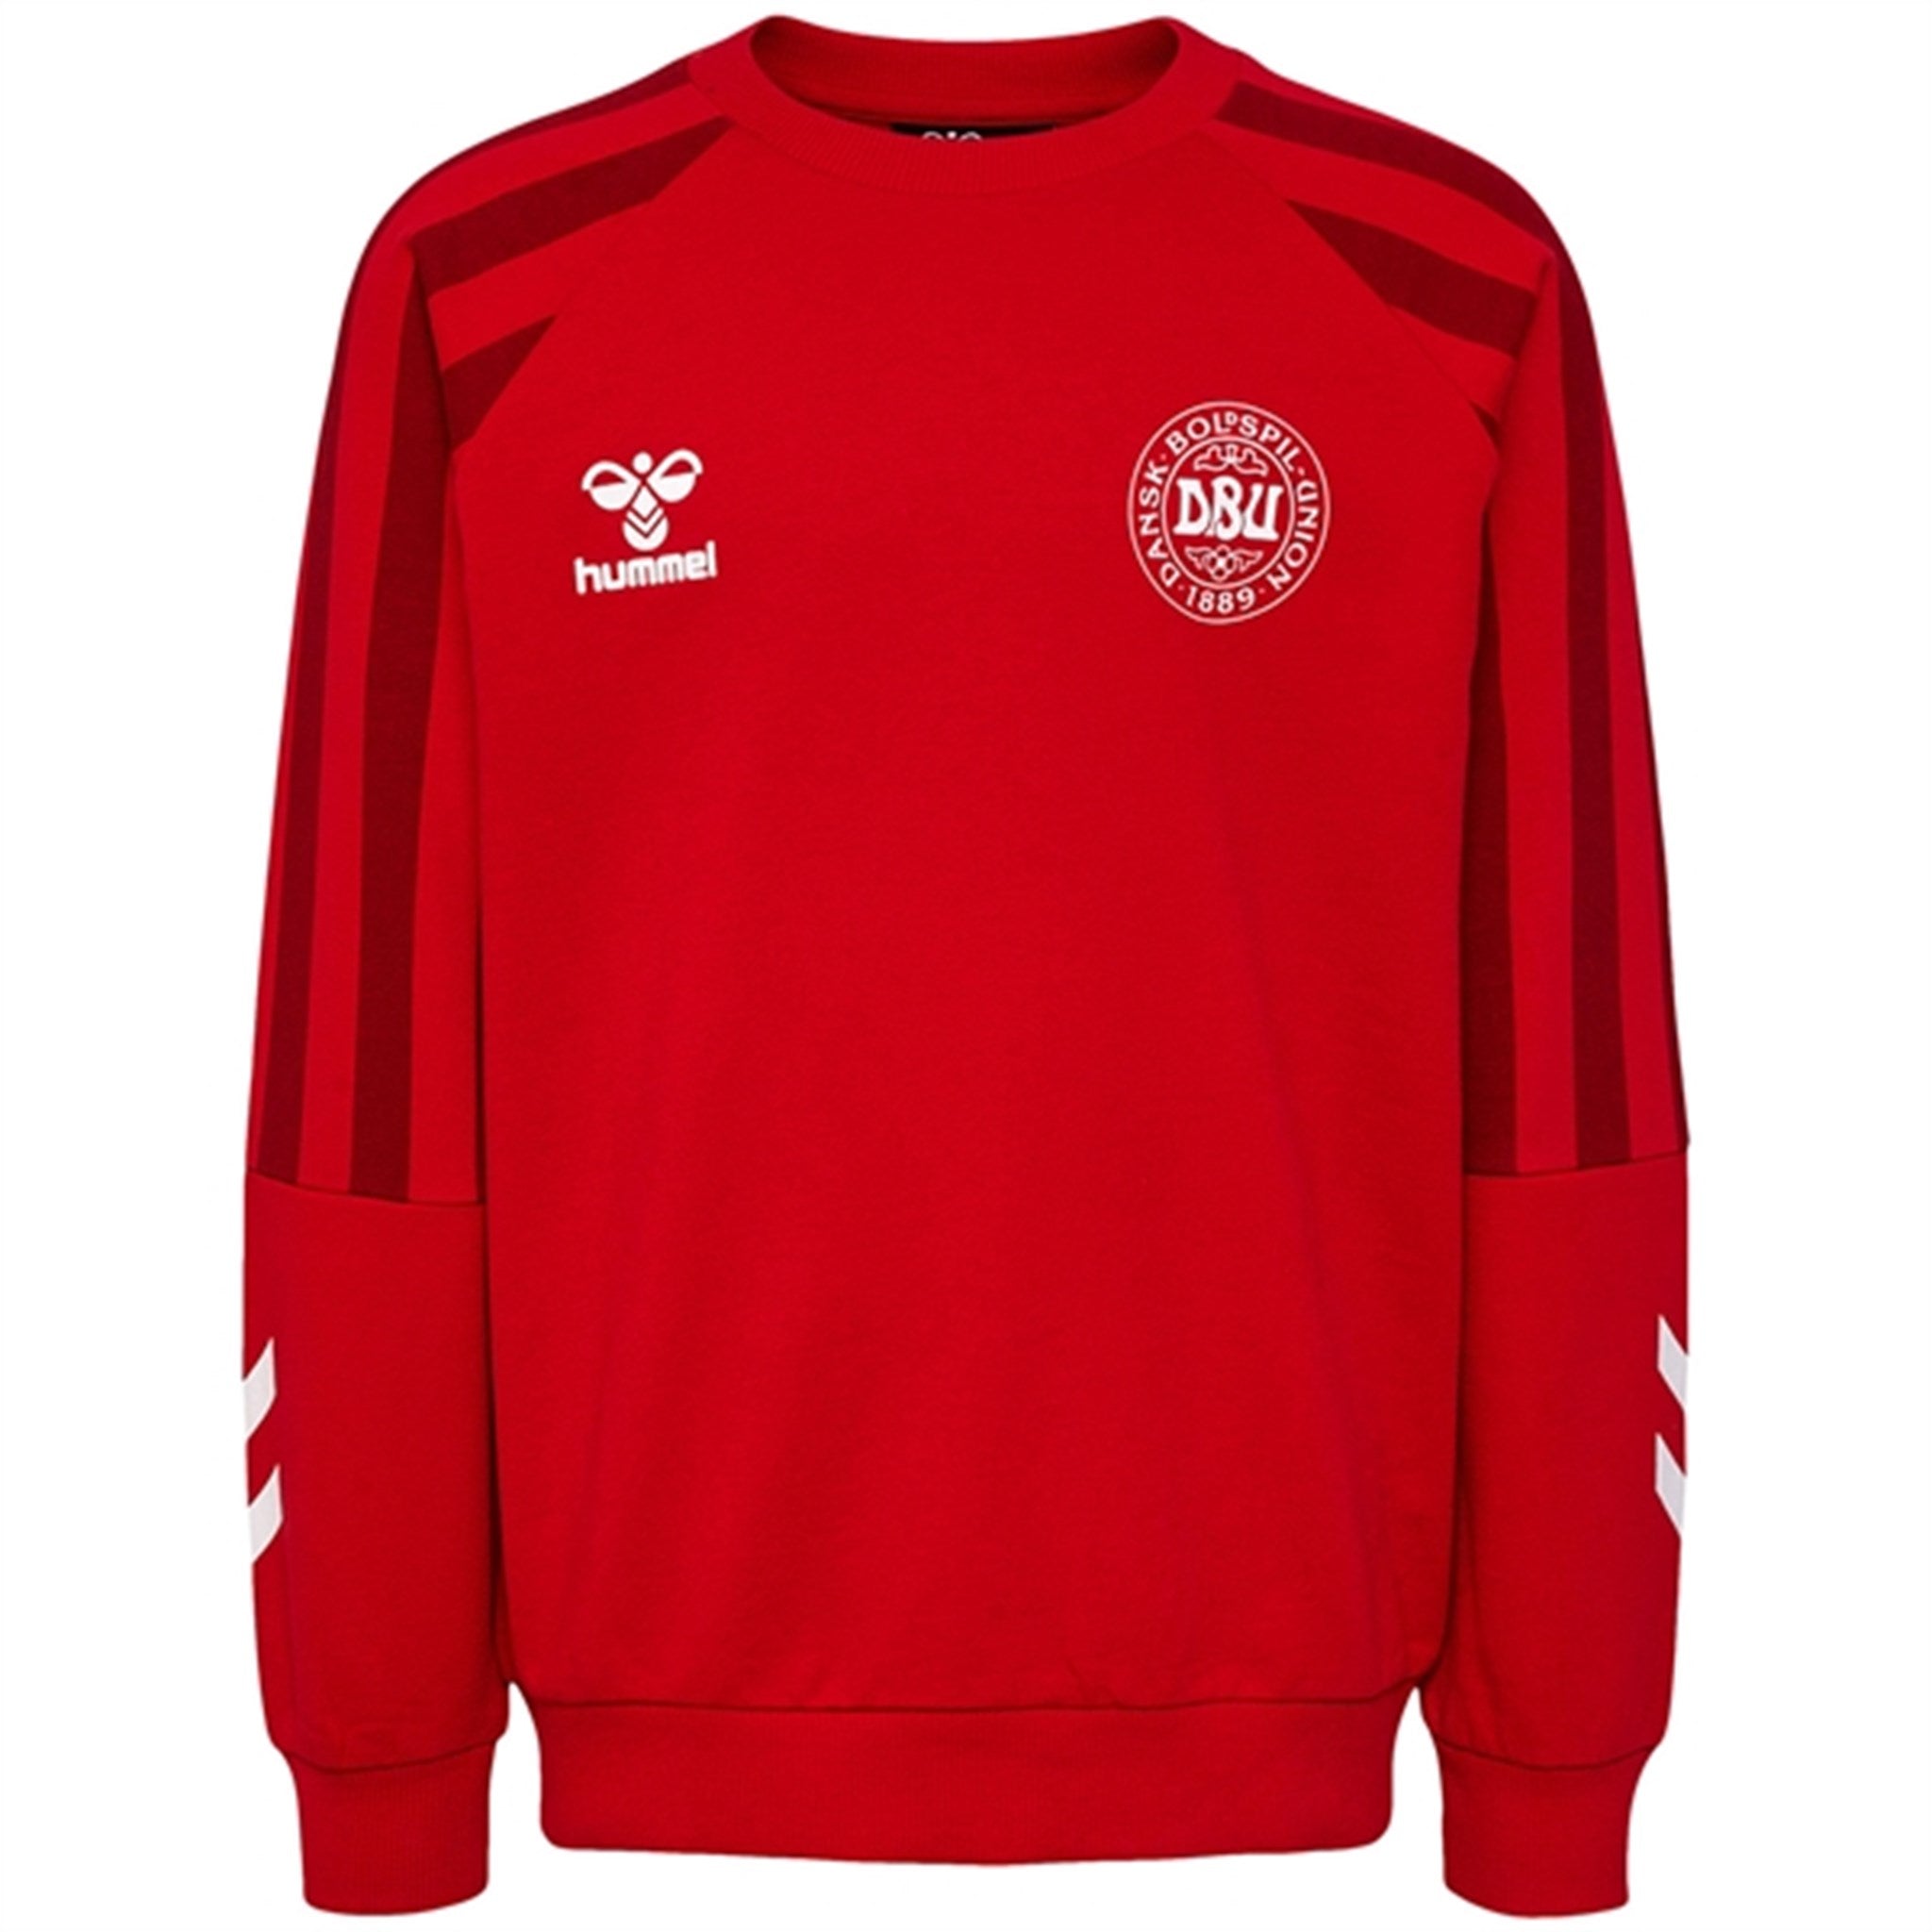 Hummel DBU VM 2022 Tango Red Honor Sweatshirt